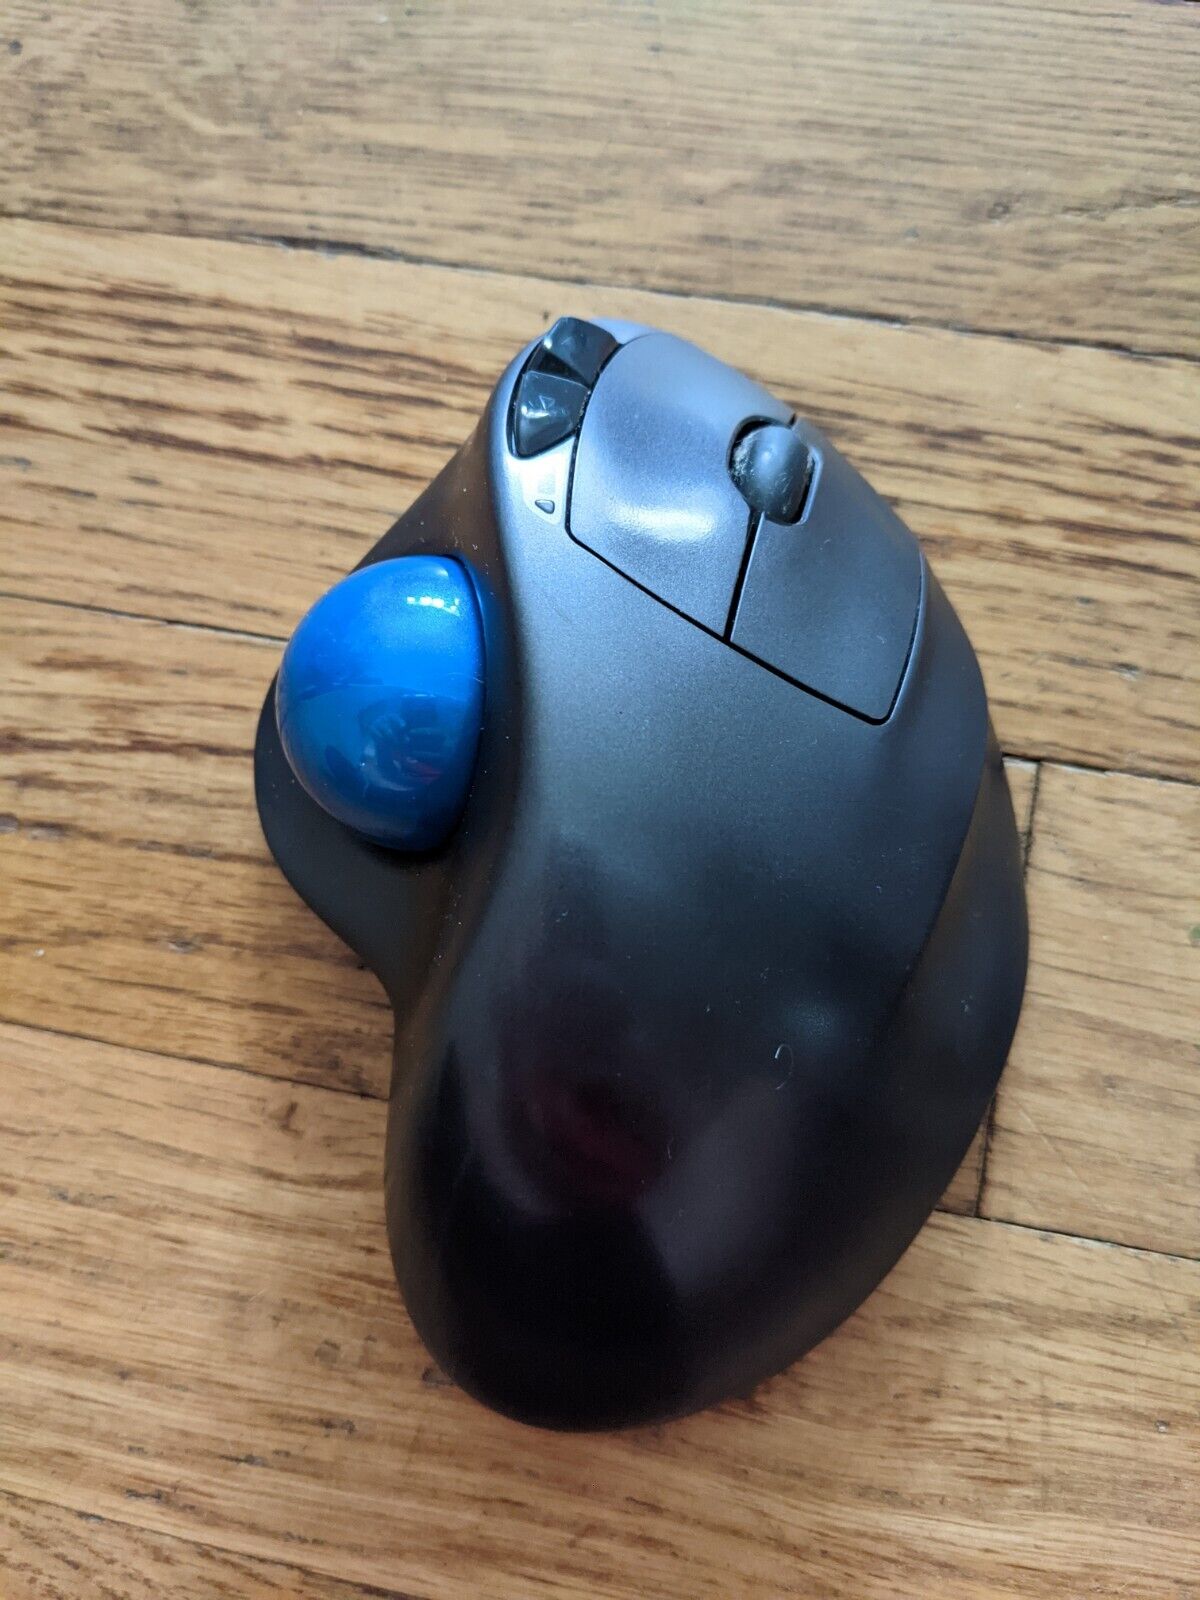 Logitech M570 Wireless Trackball Mouse Blue Gray w/Dongle